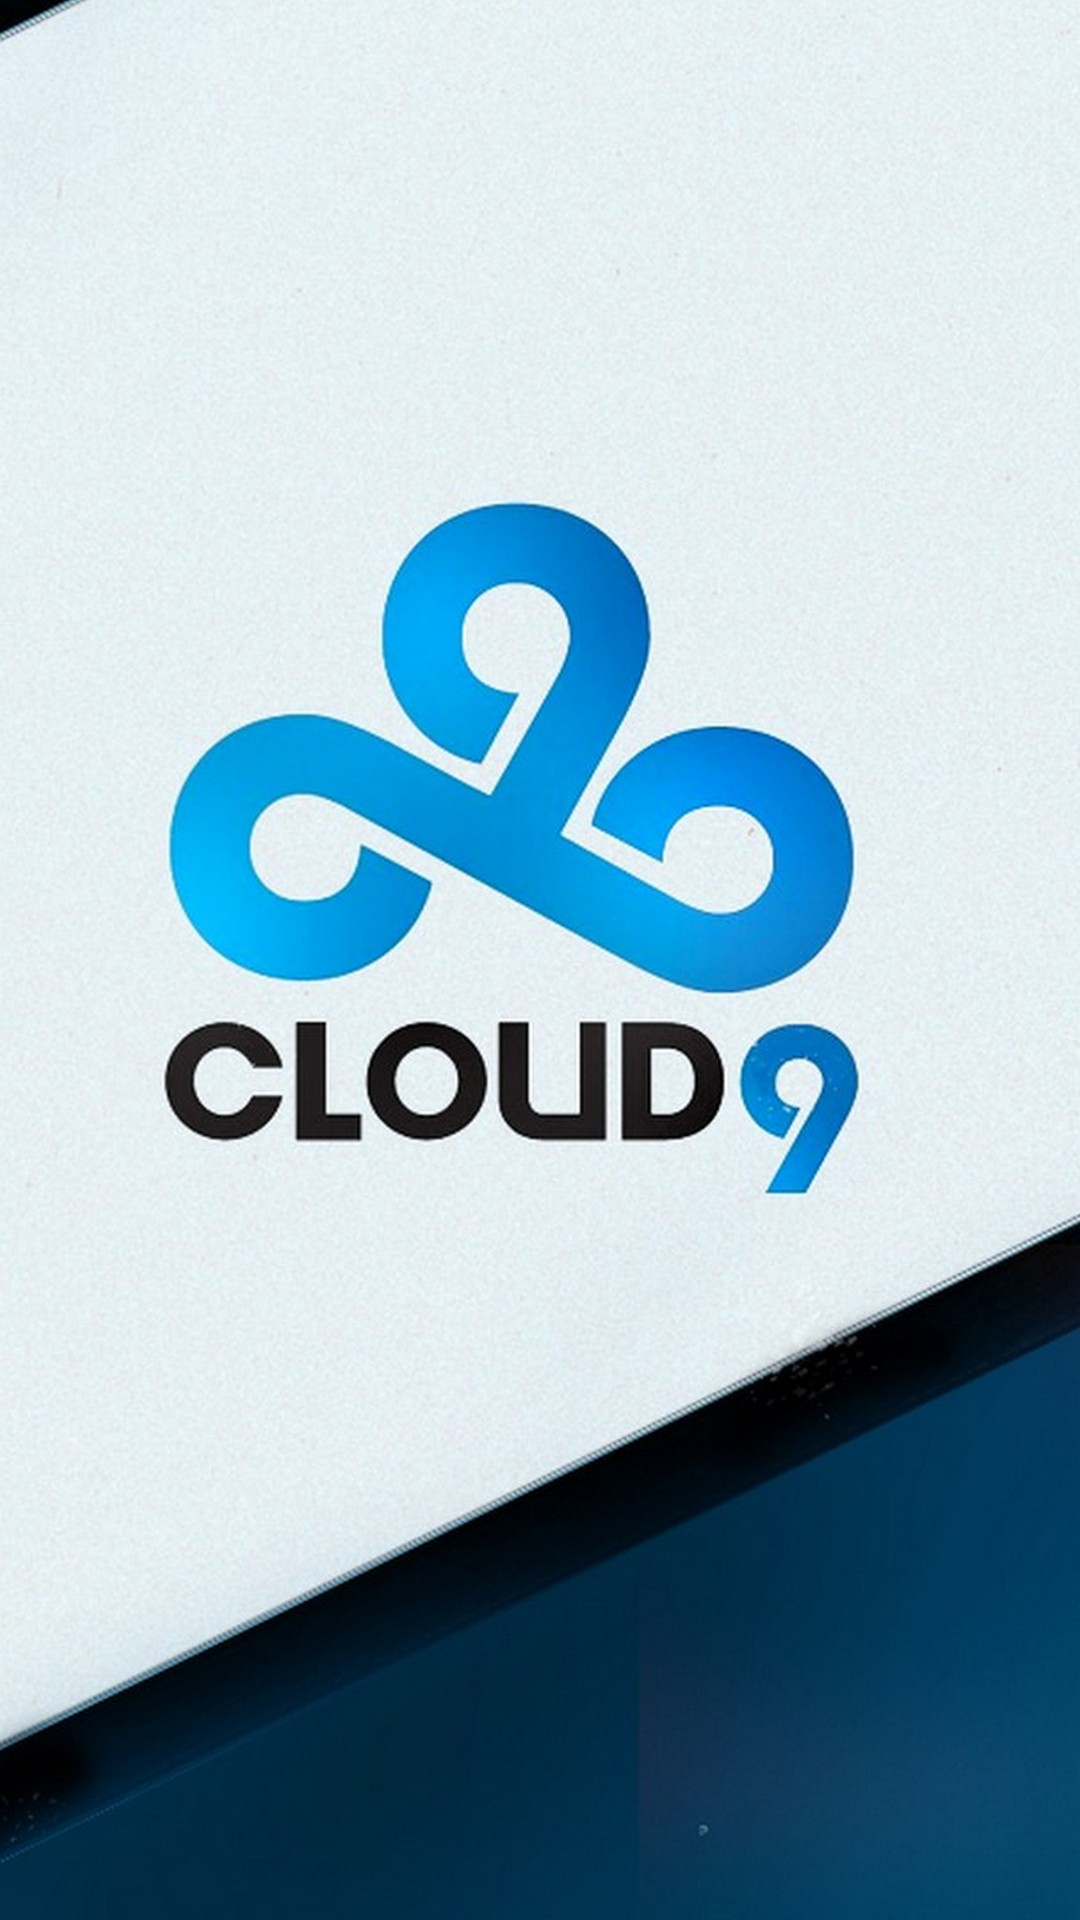 Cloud 9 Games iPhone Wallpaper resolution 1080x1920